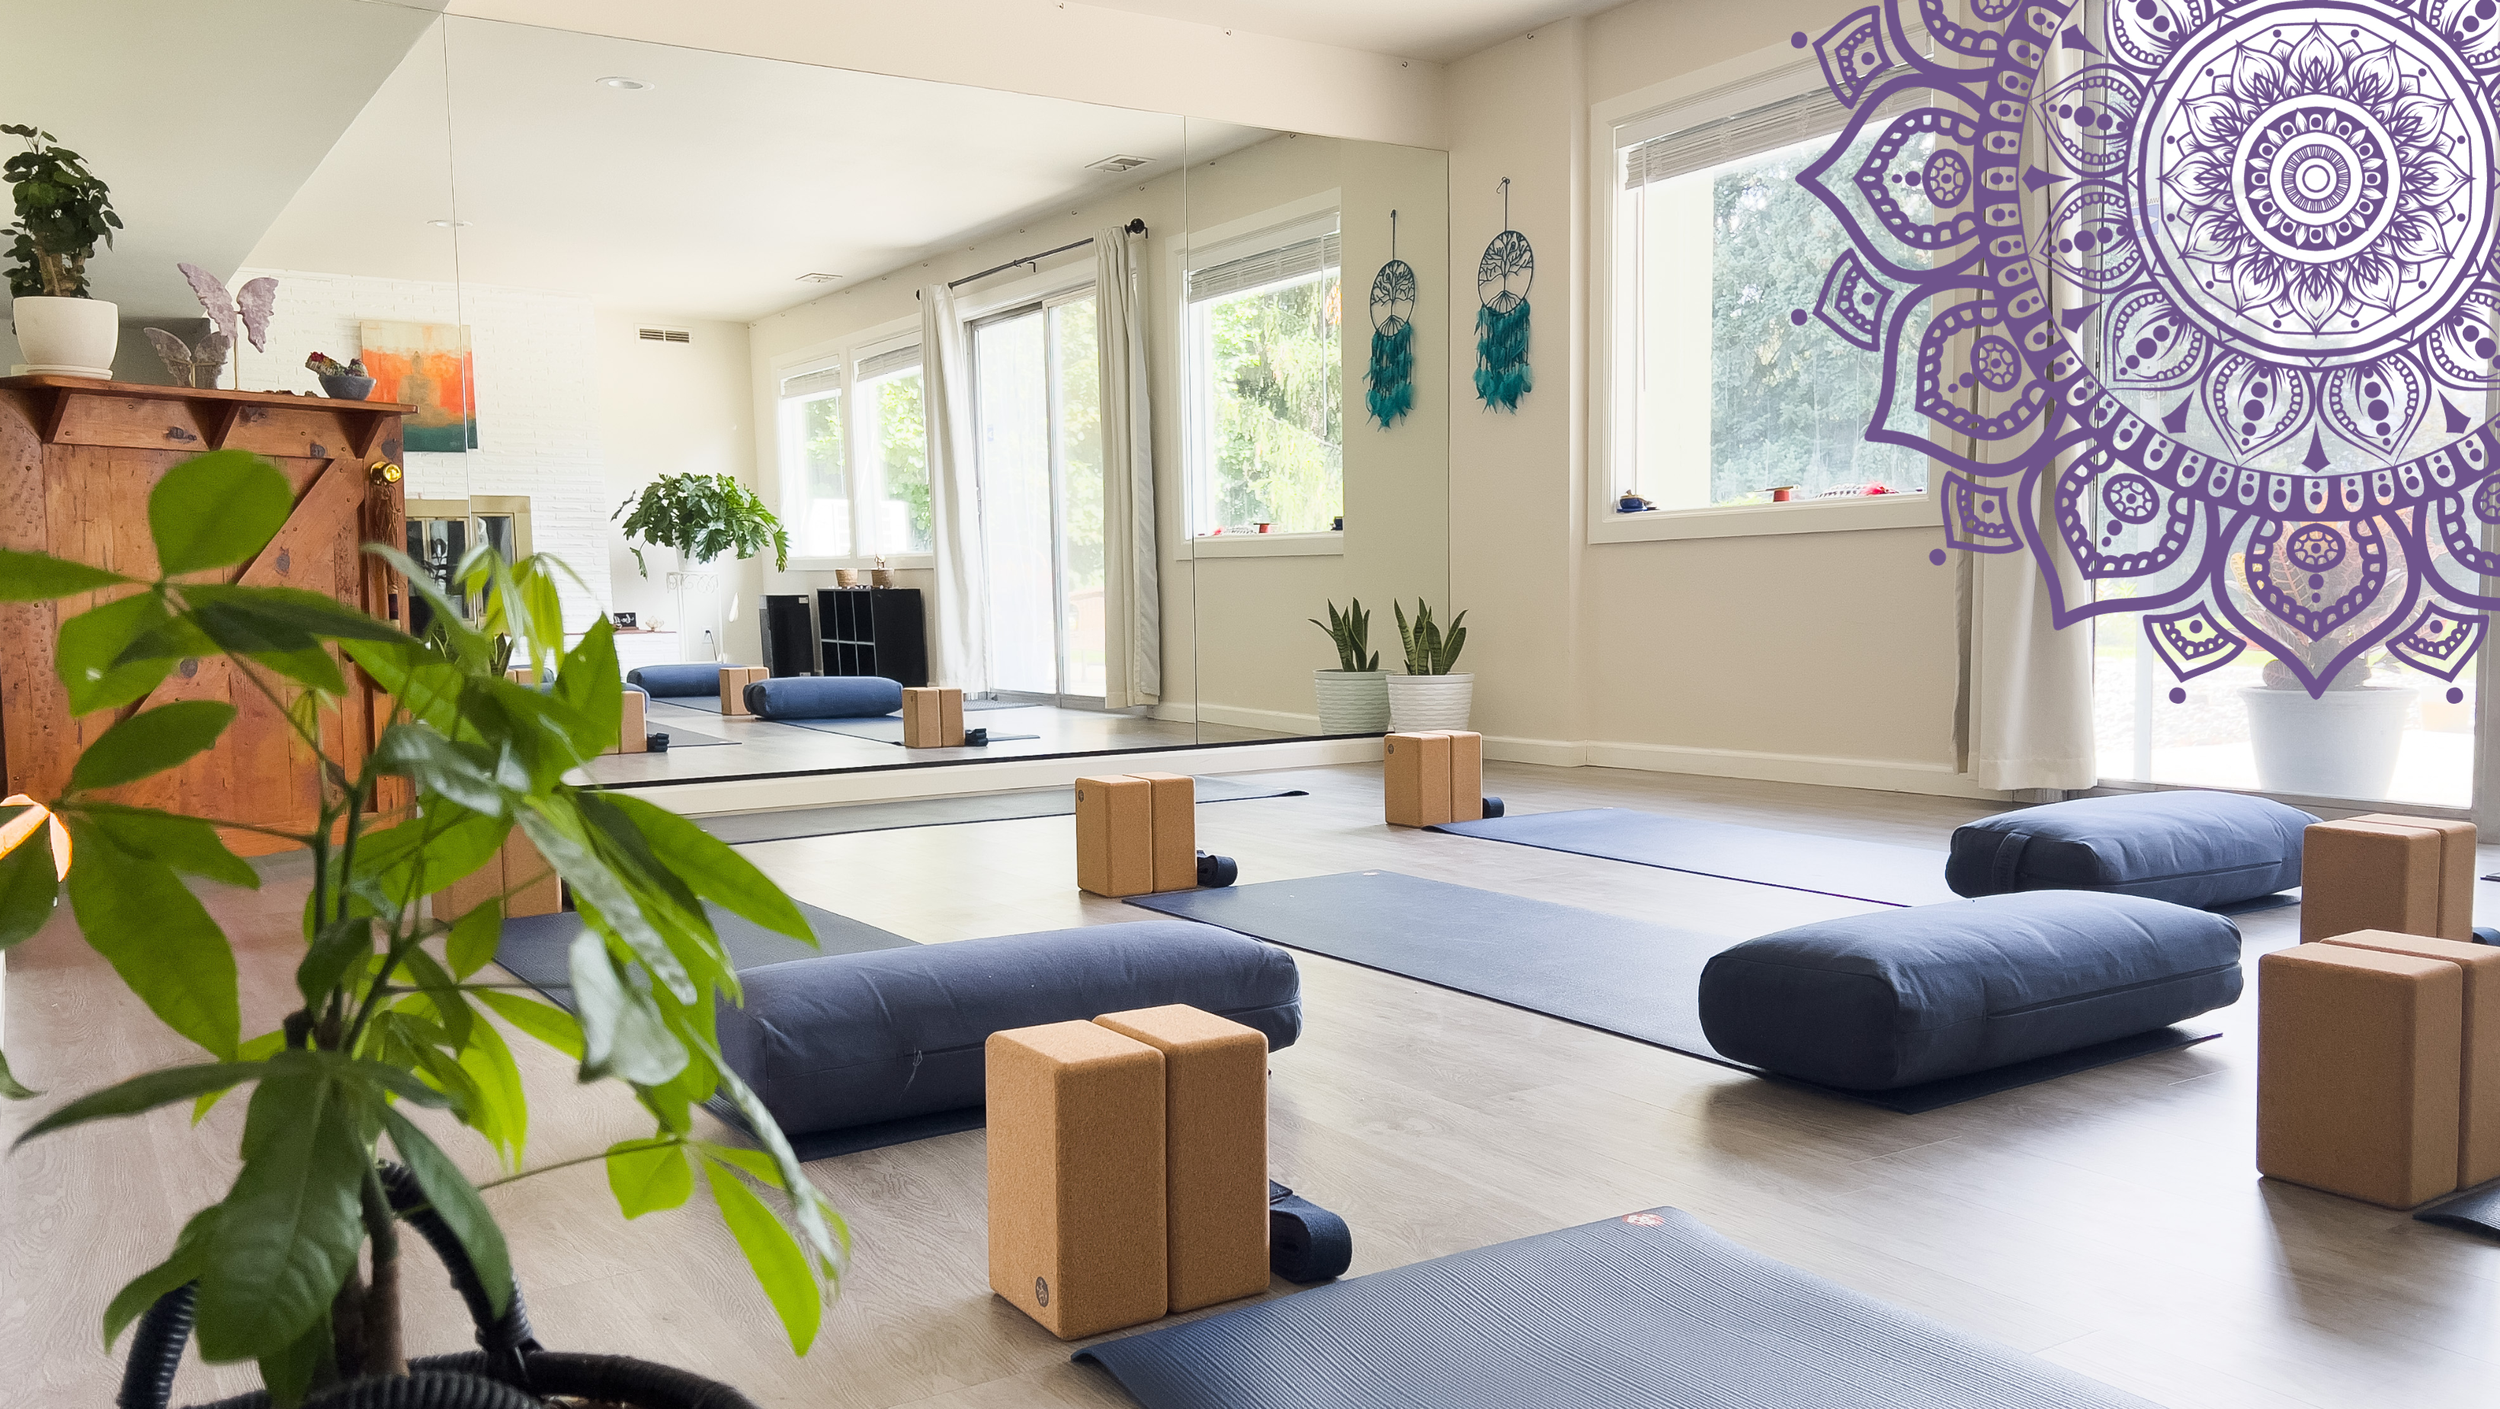 Yoga 🧘‍♀️ studio by @vda_designs using @kalcolighting fixtures